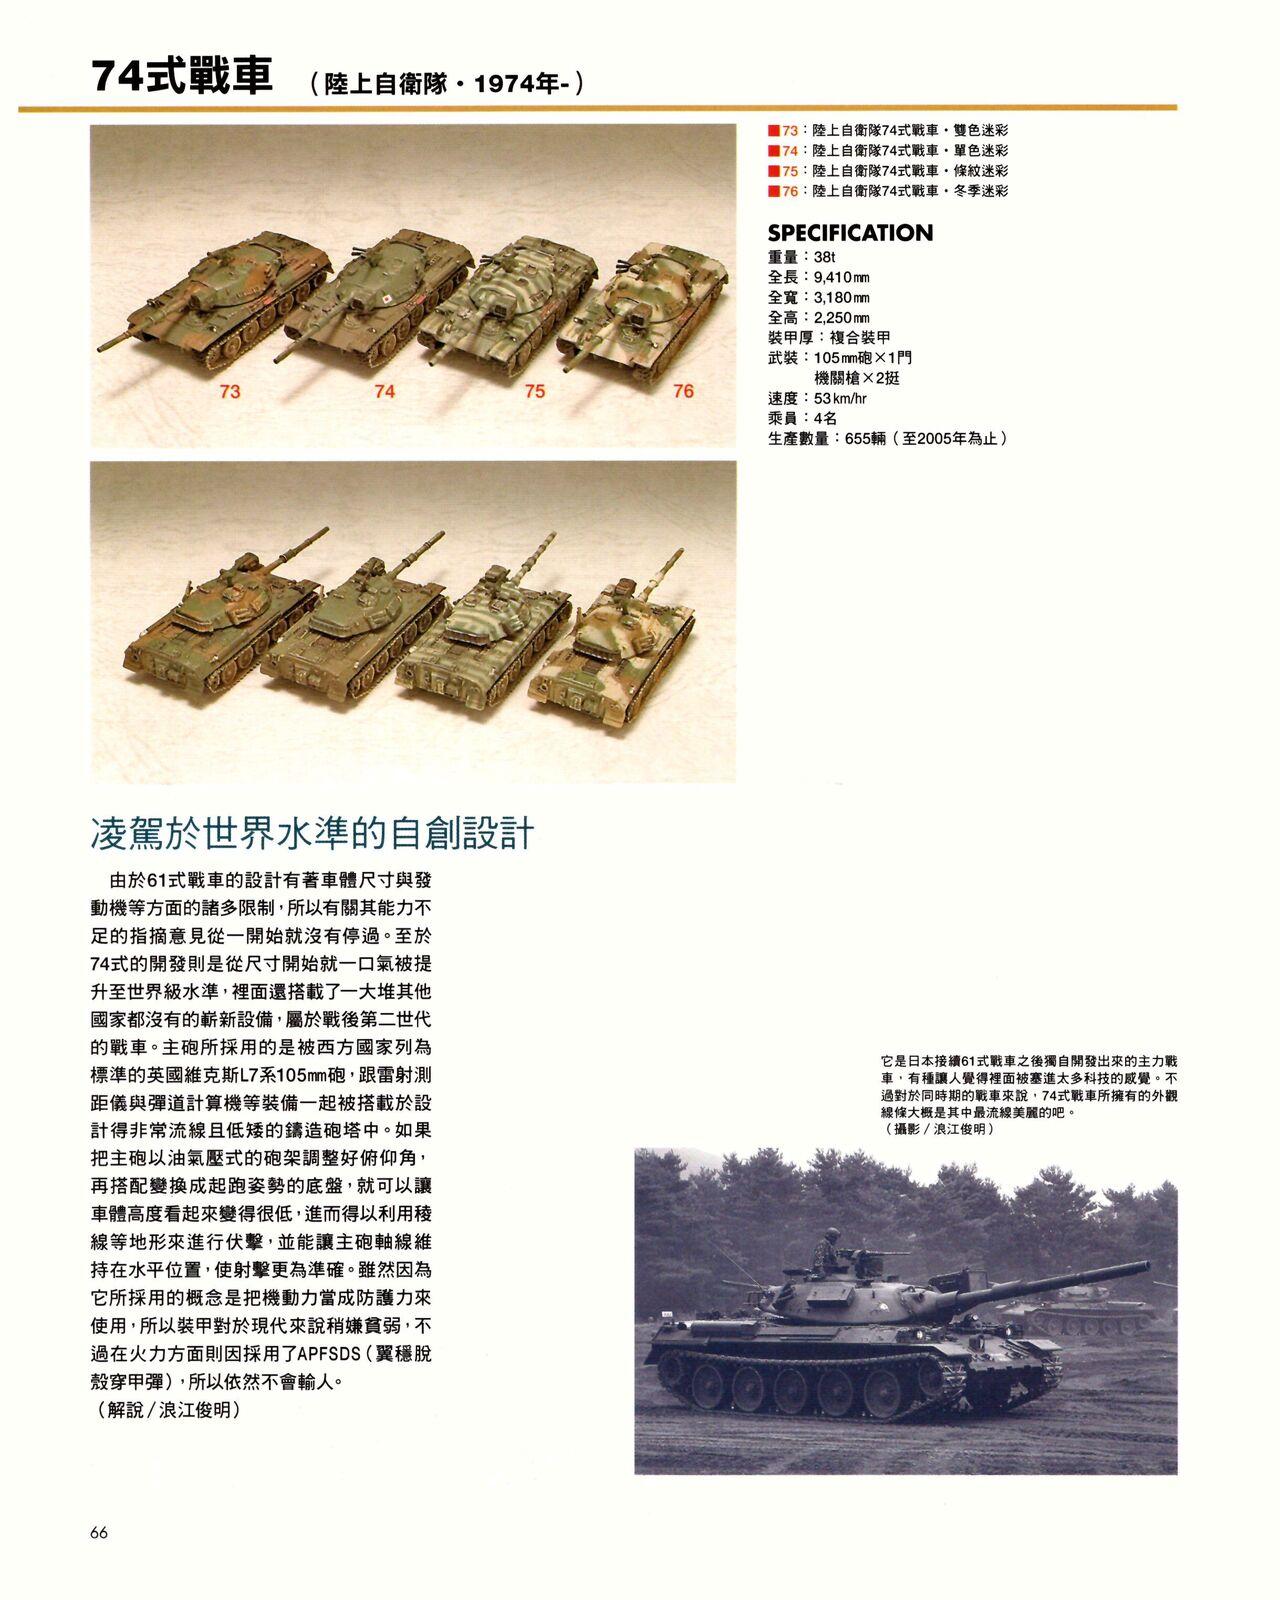 世界戰車博物館圖鑑(2009台版)  PANZERTALES WORLD TANK MUSEUM illustrated (chinese) 65